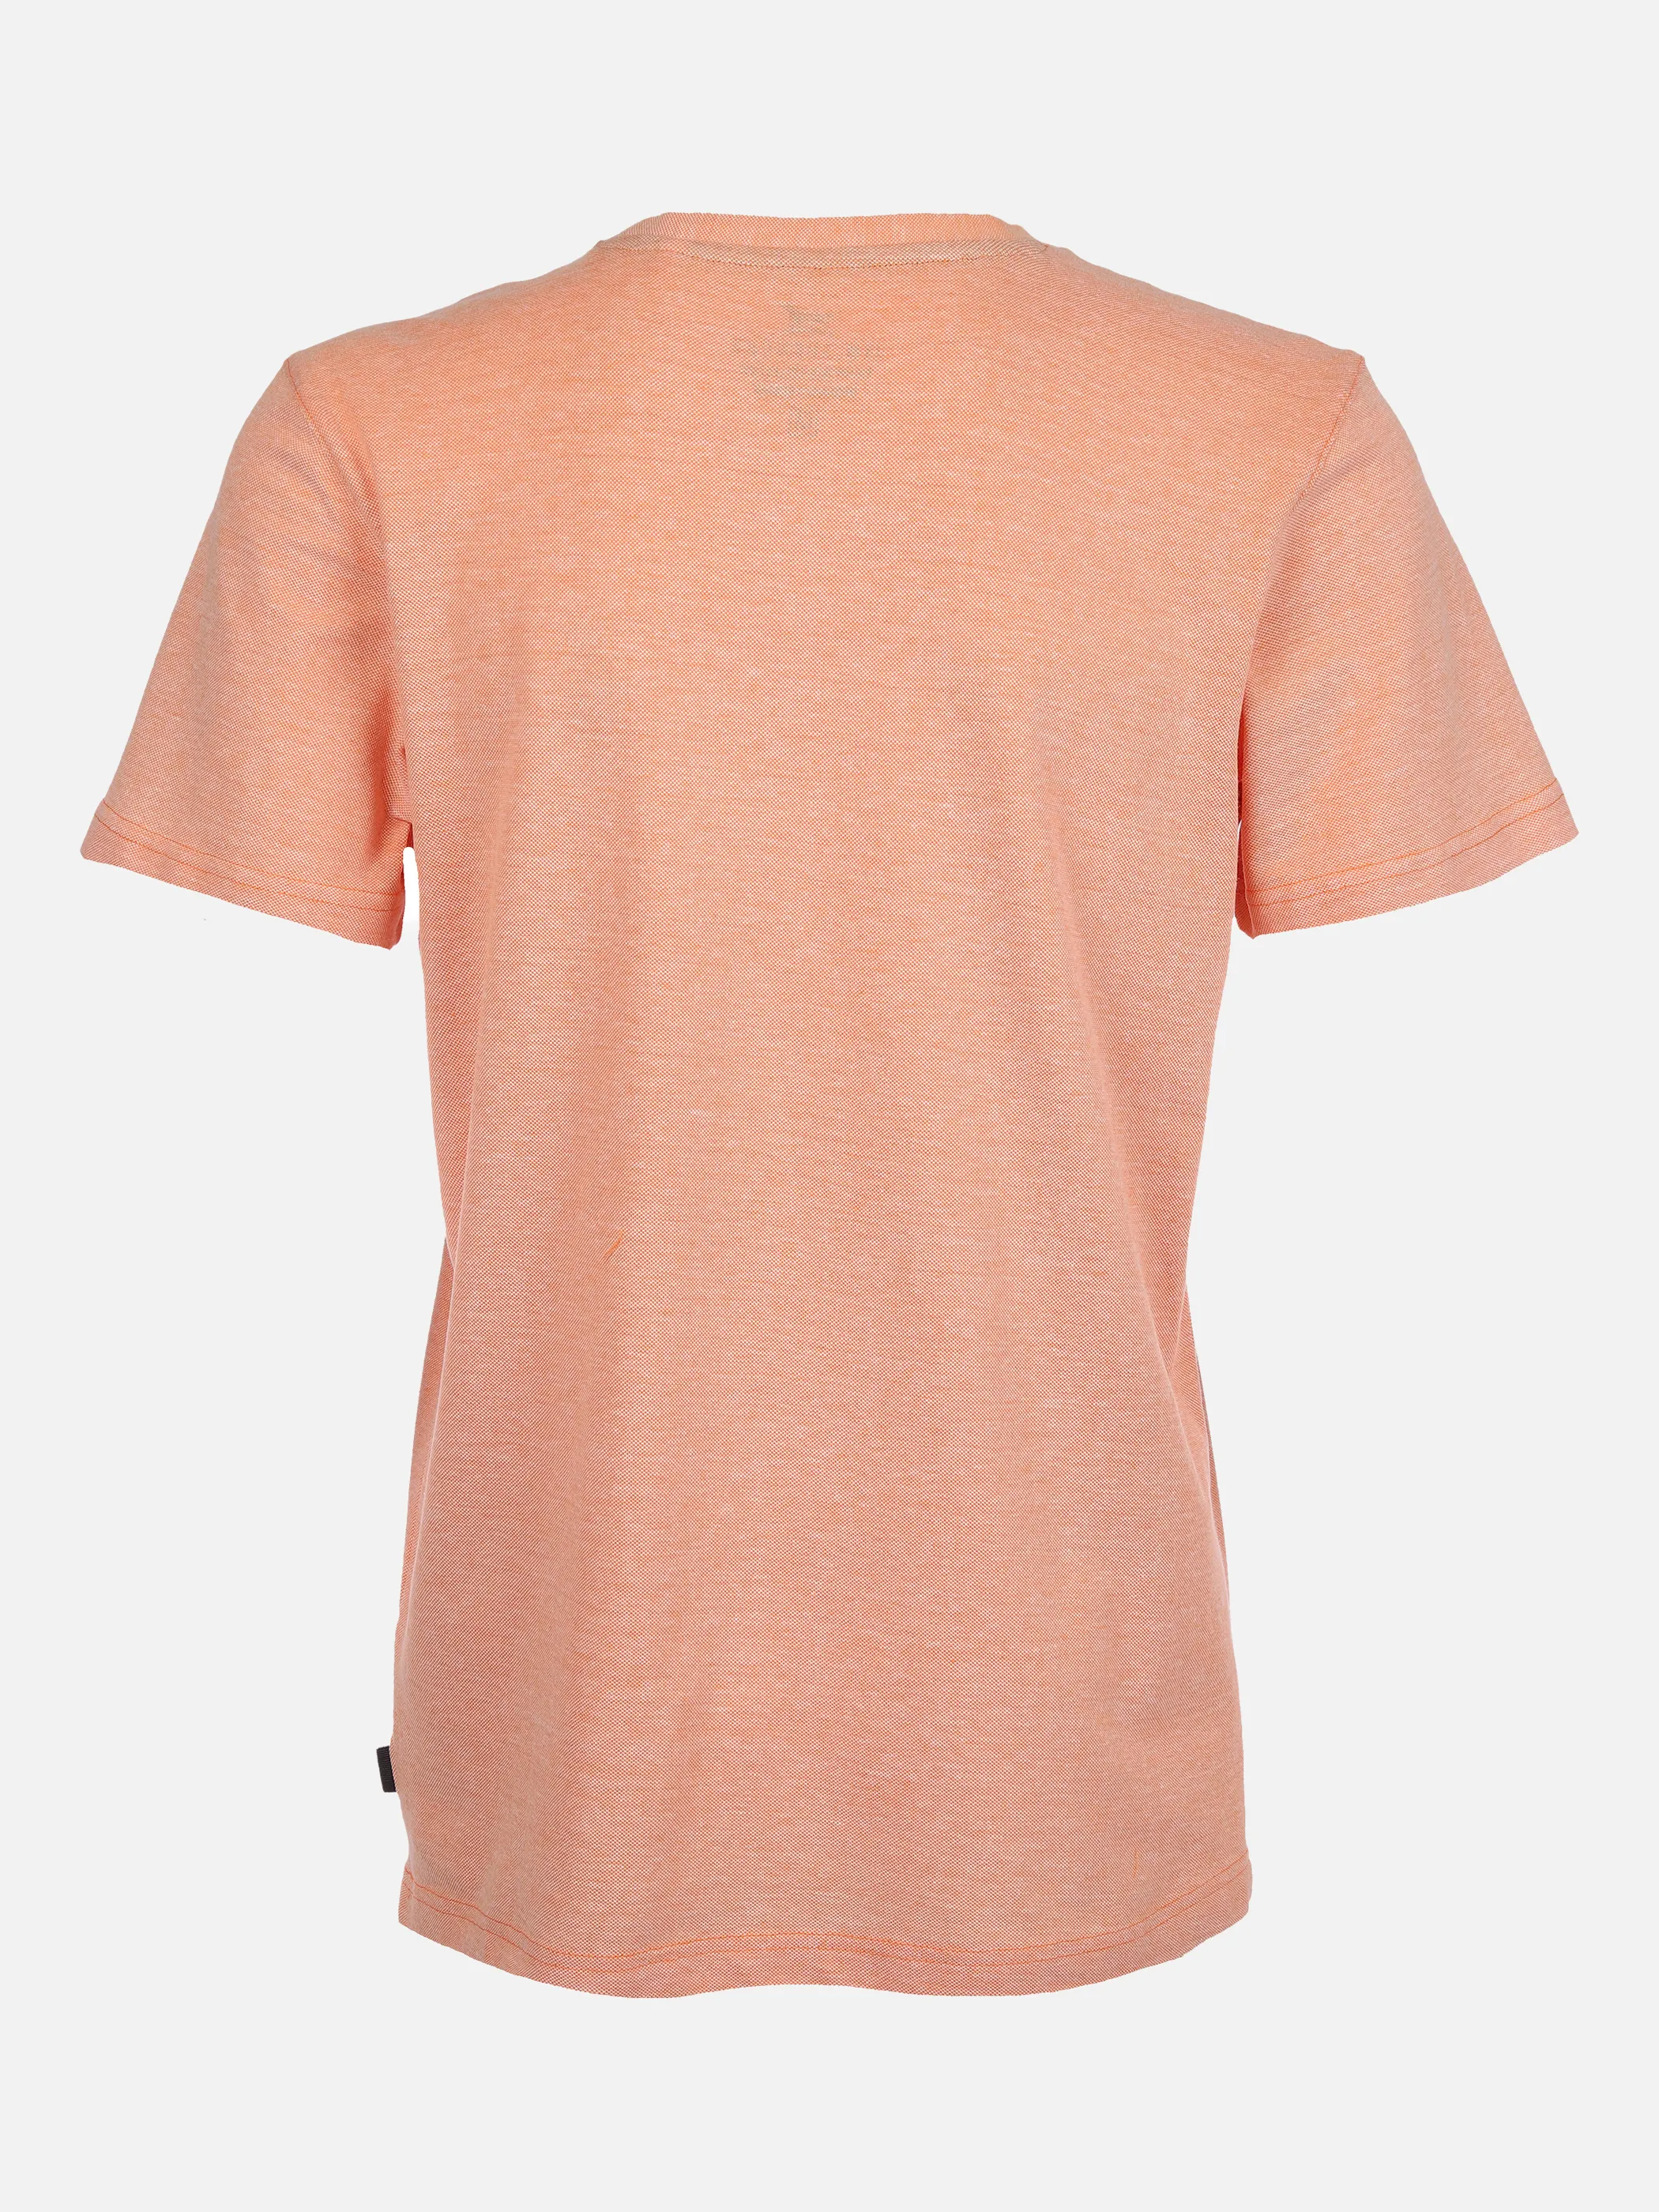 Jim Spencer He. T-Shirt 1/2 Arm pique Orange 862097 ORANGE MEL 2